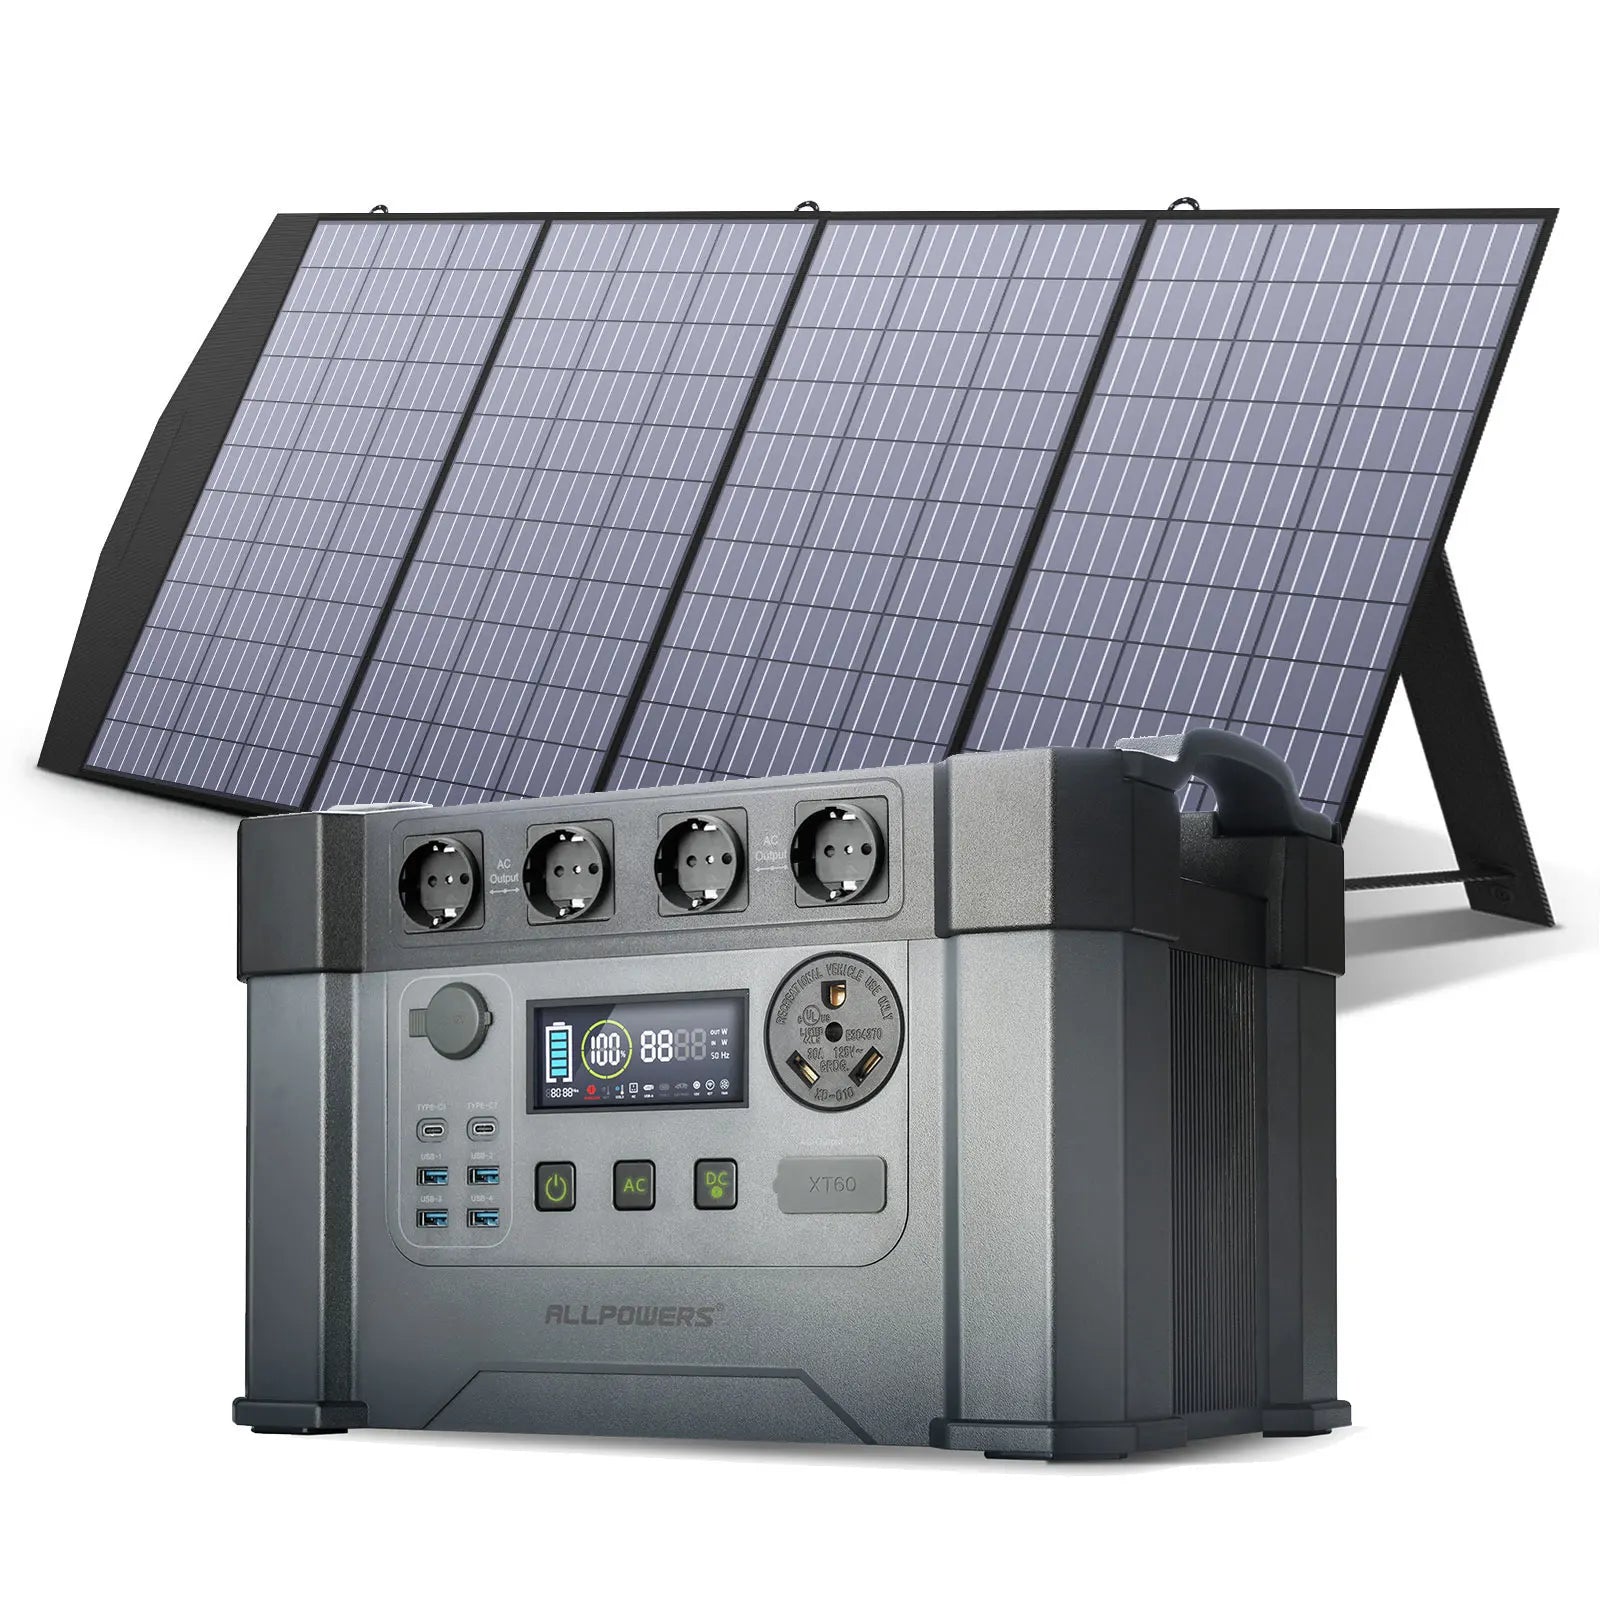 Portable solar panel kit with versatile connectors for charging portable solar generators.